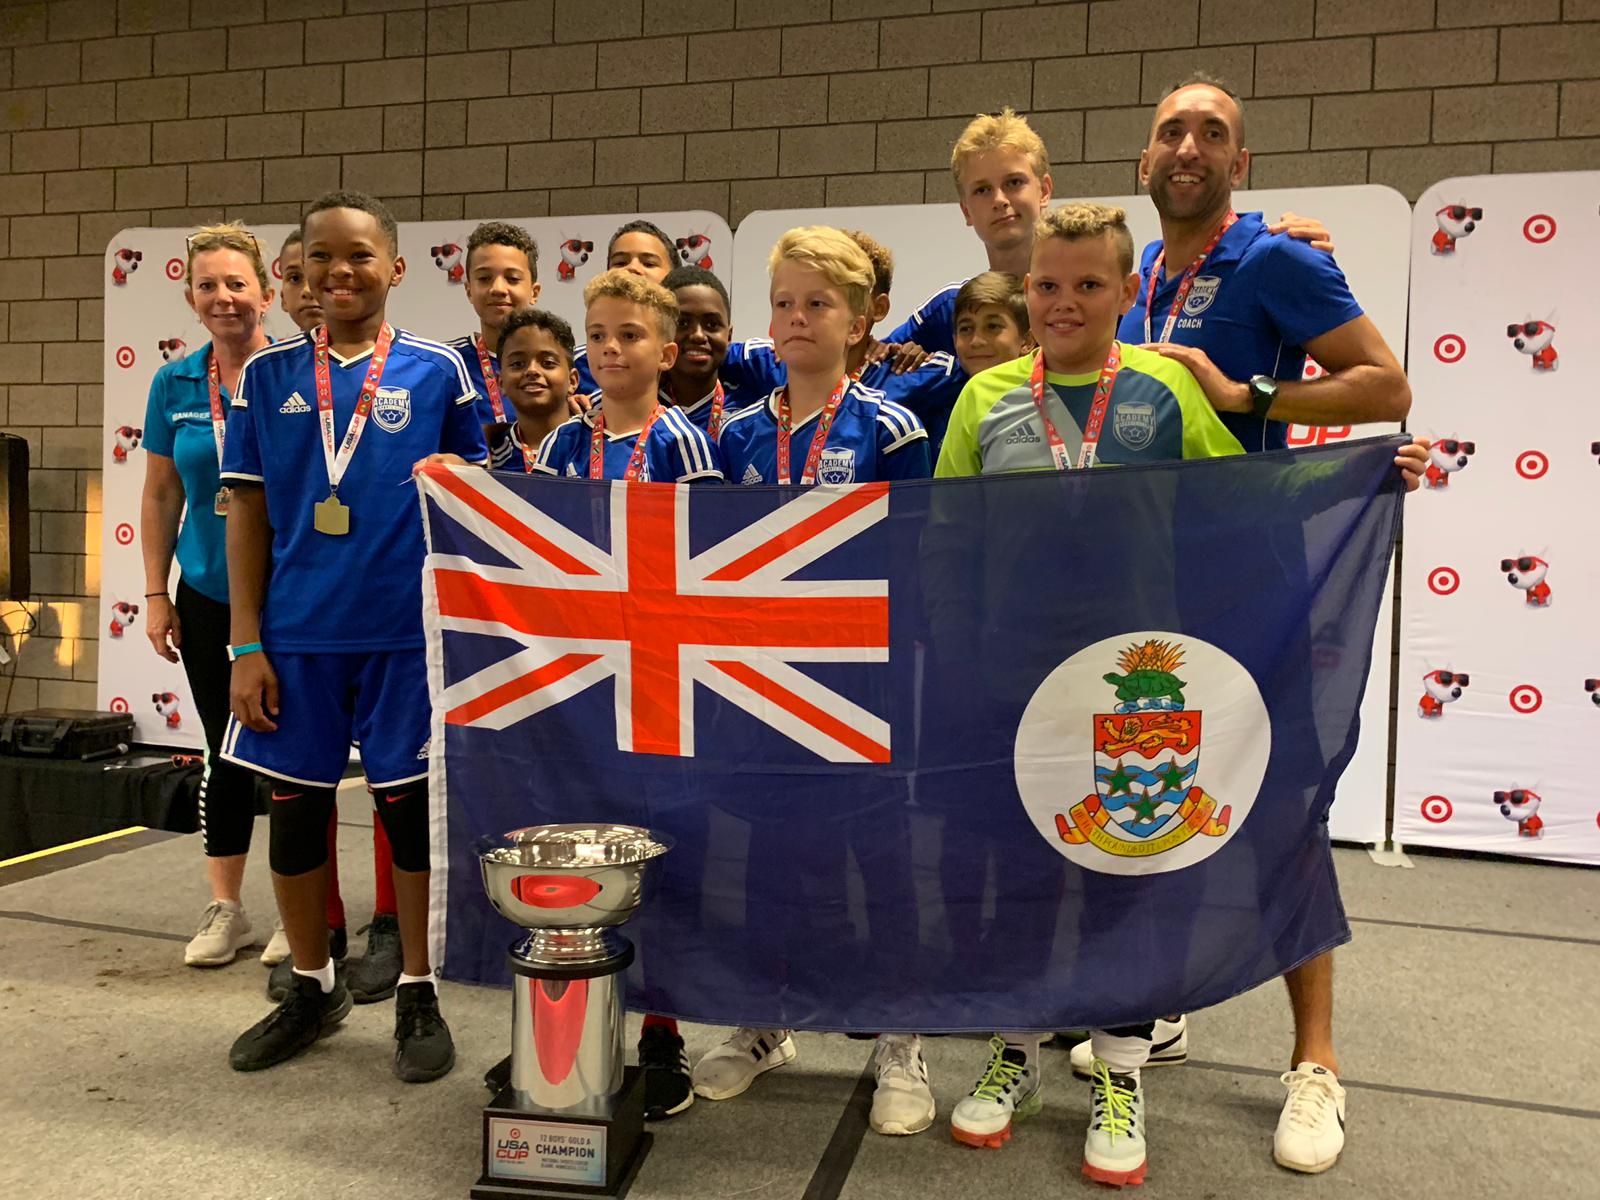 Academy U12 Boys win the Gold ‘A’ bracket Championship